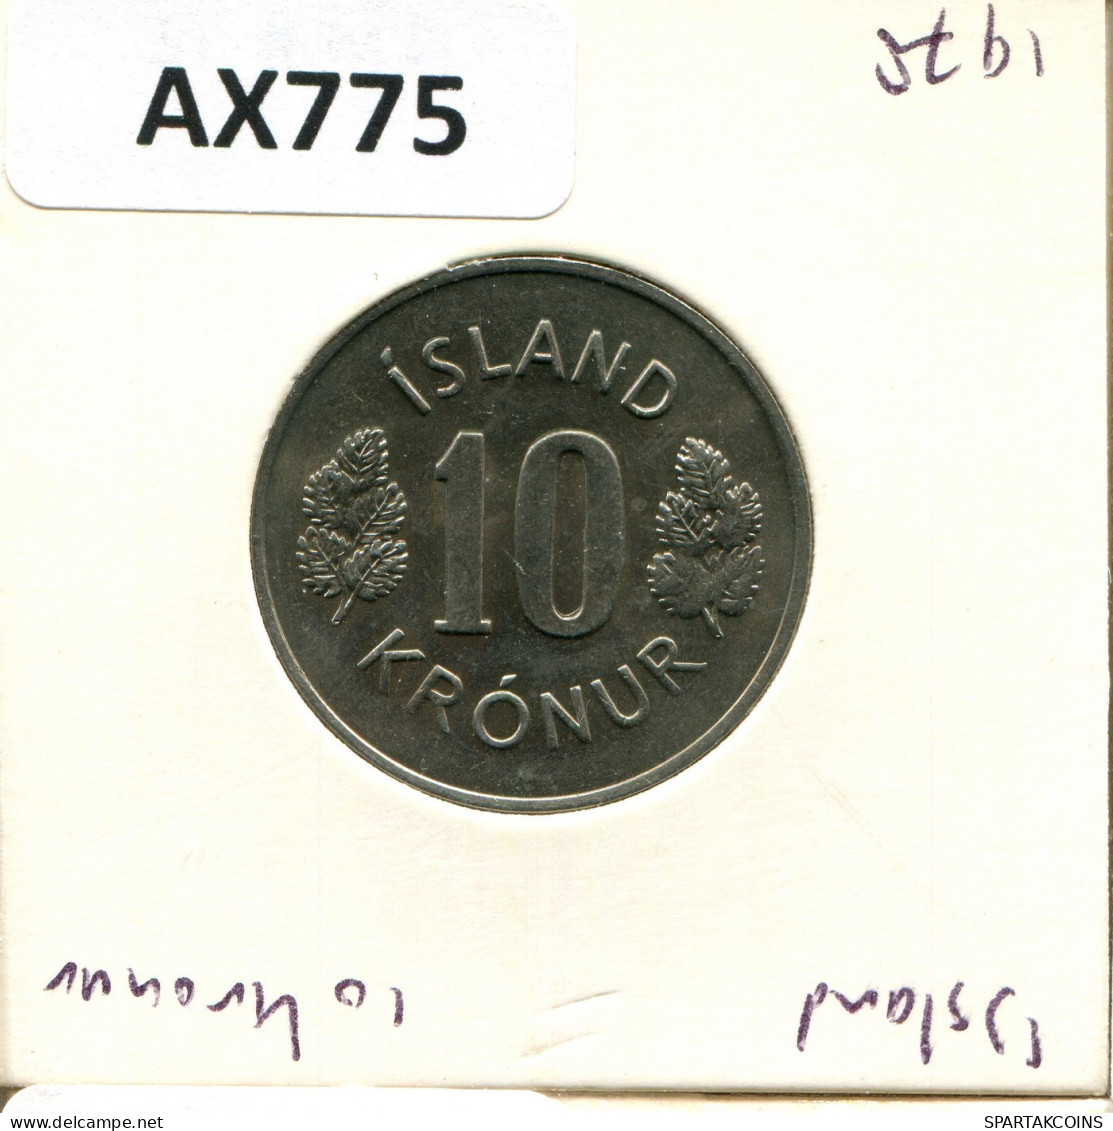 10 KRONUR 1978 ISLANDIA ICELAND Moneda #AX775.E.A - IJsland